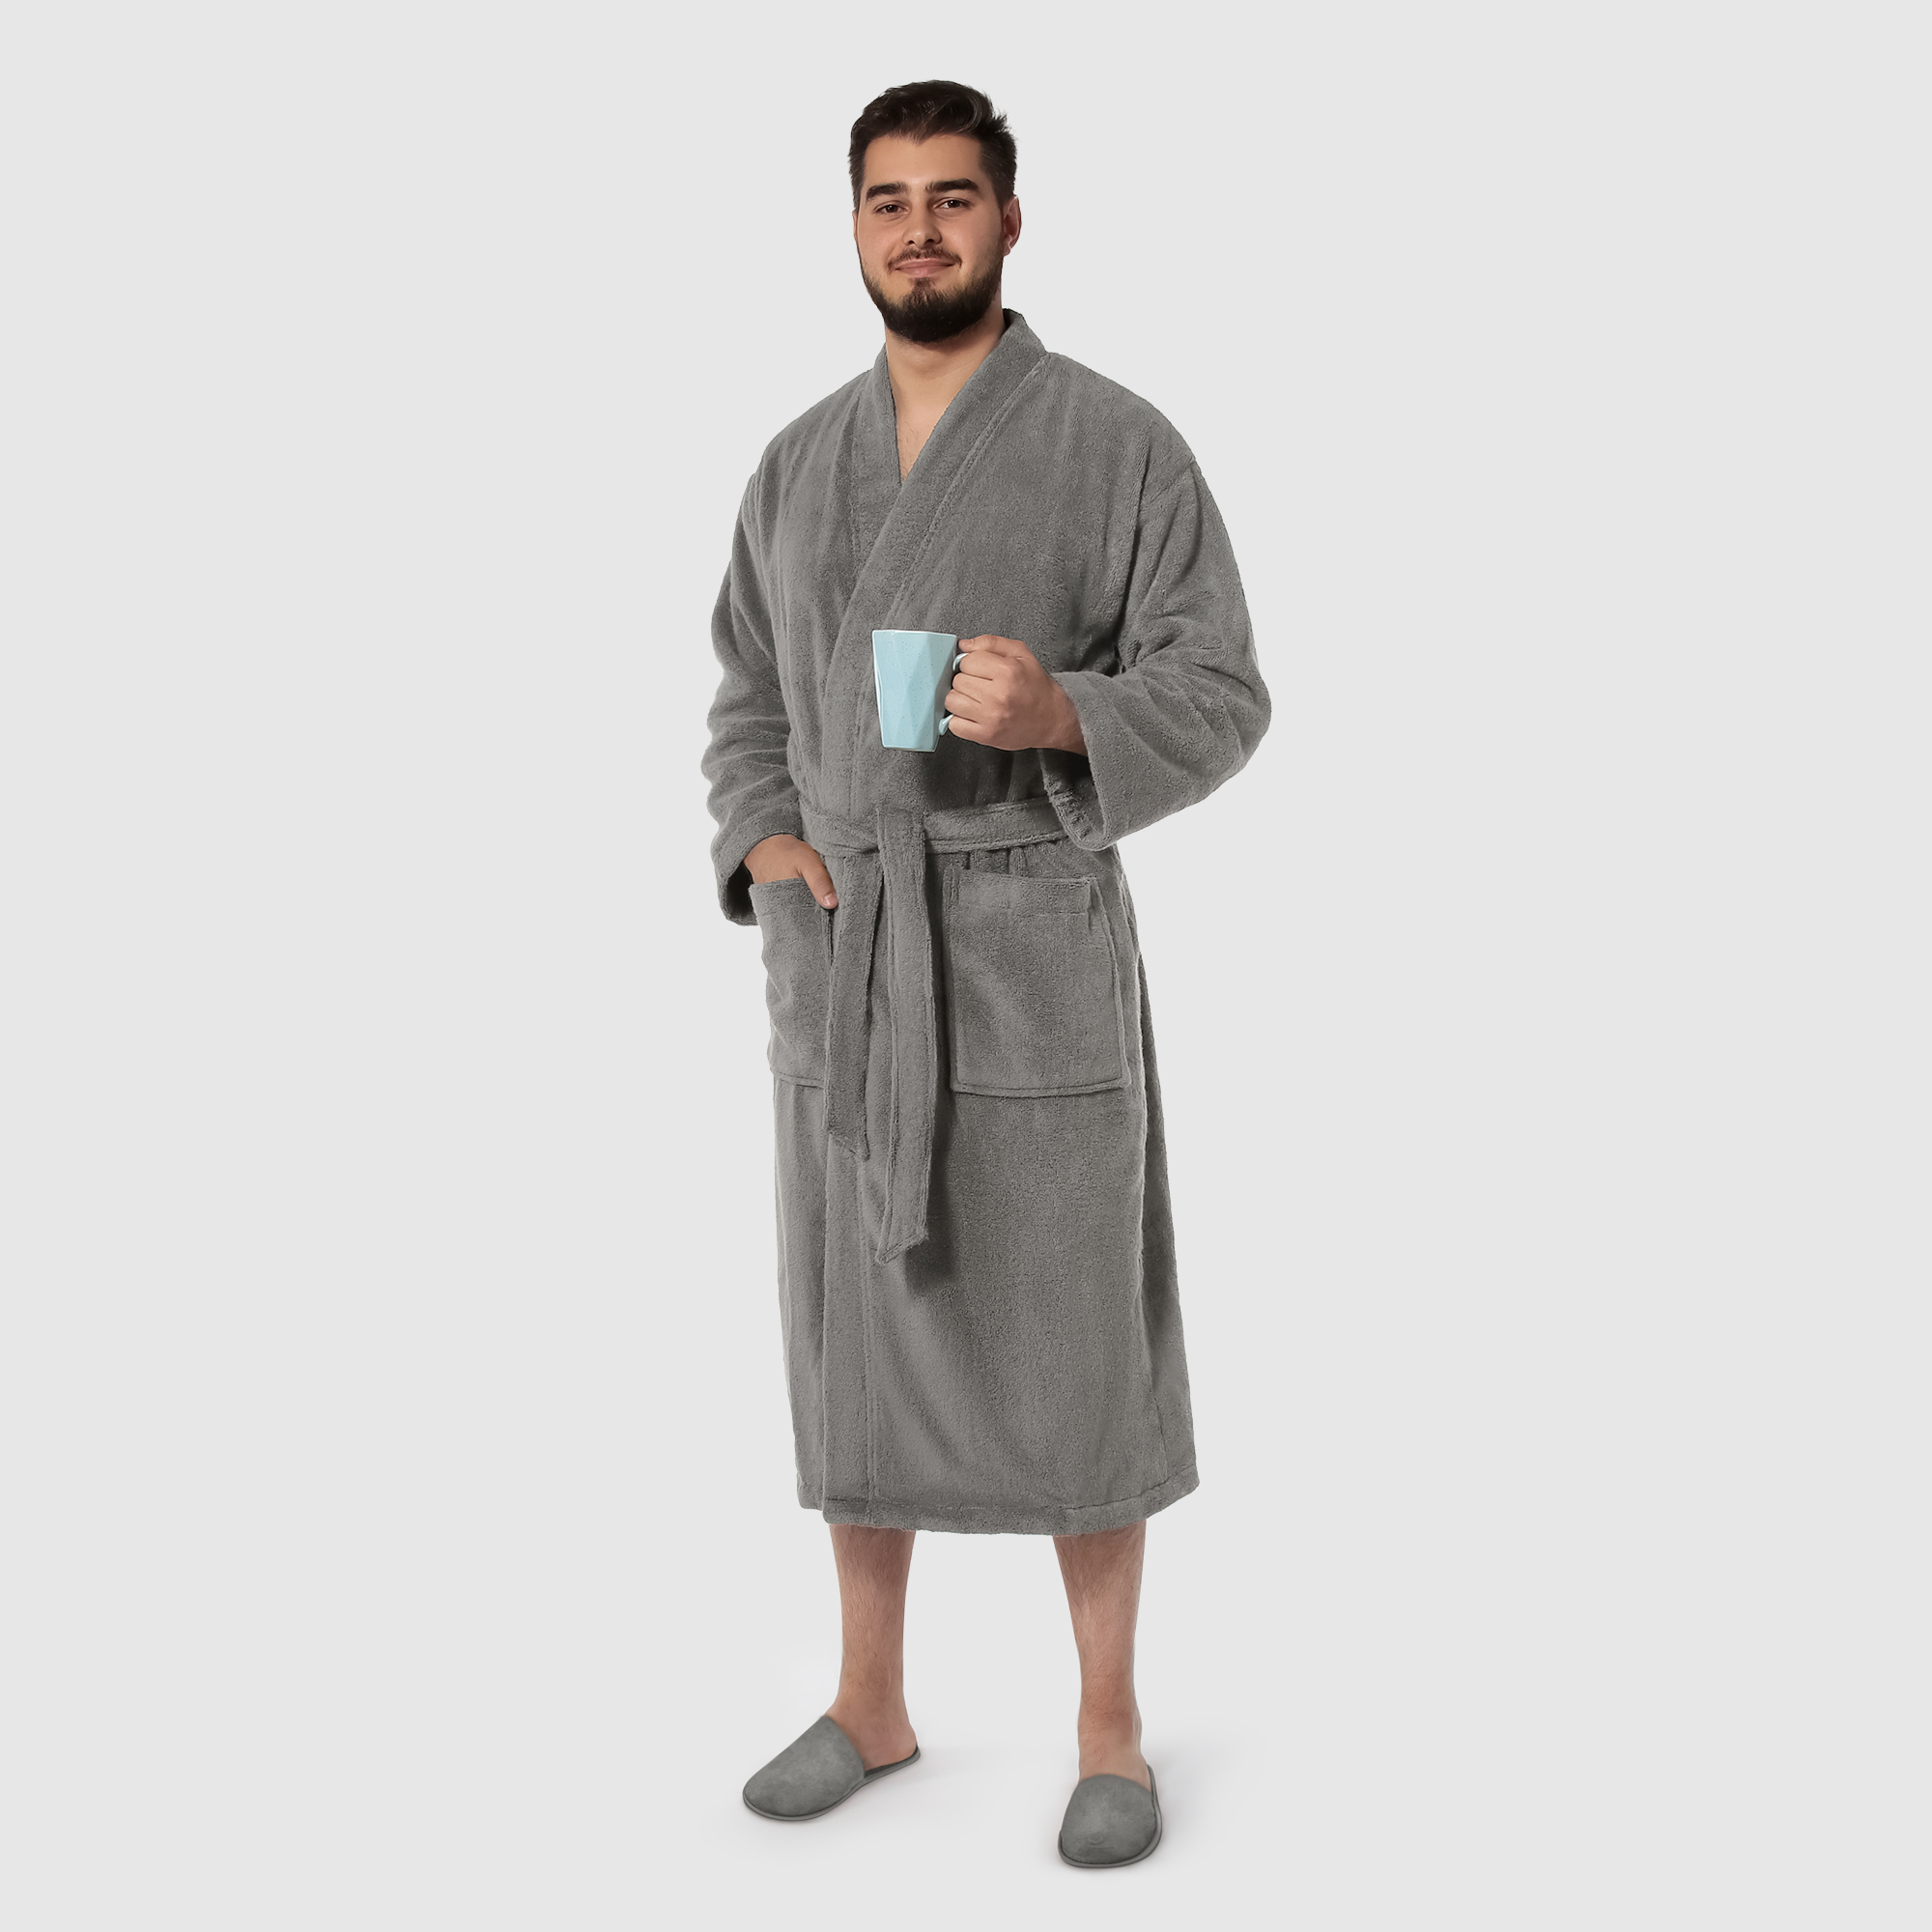 Мужской халат Maisonette Parla светло-серый S халат мужской asil sauna kimono brown l вафельный